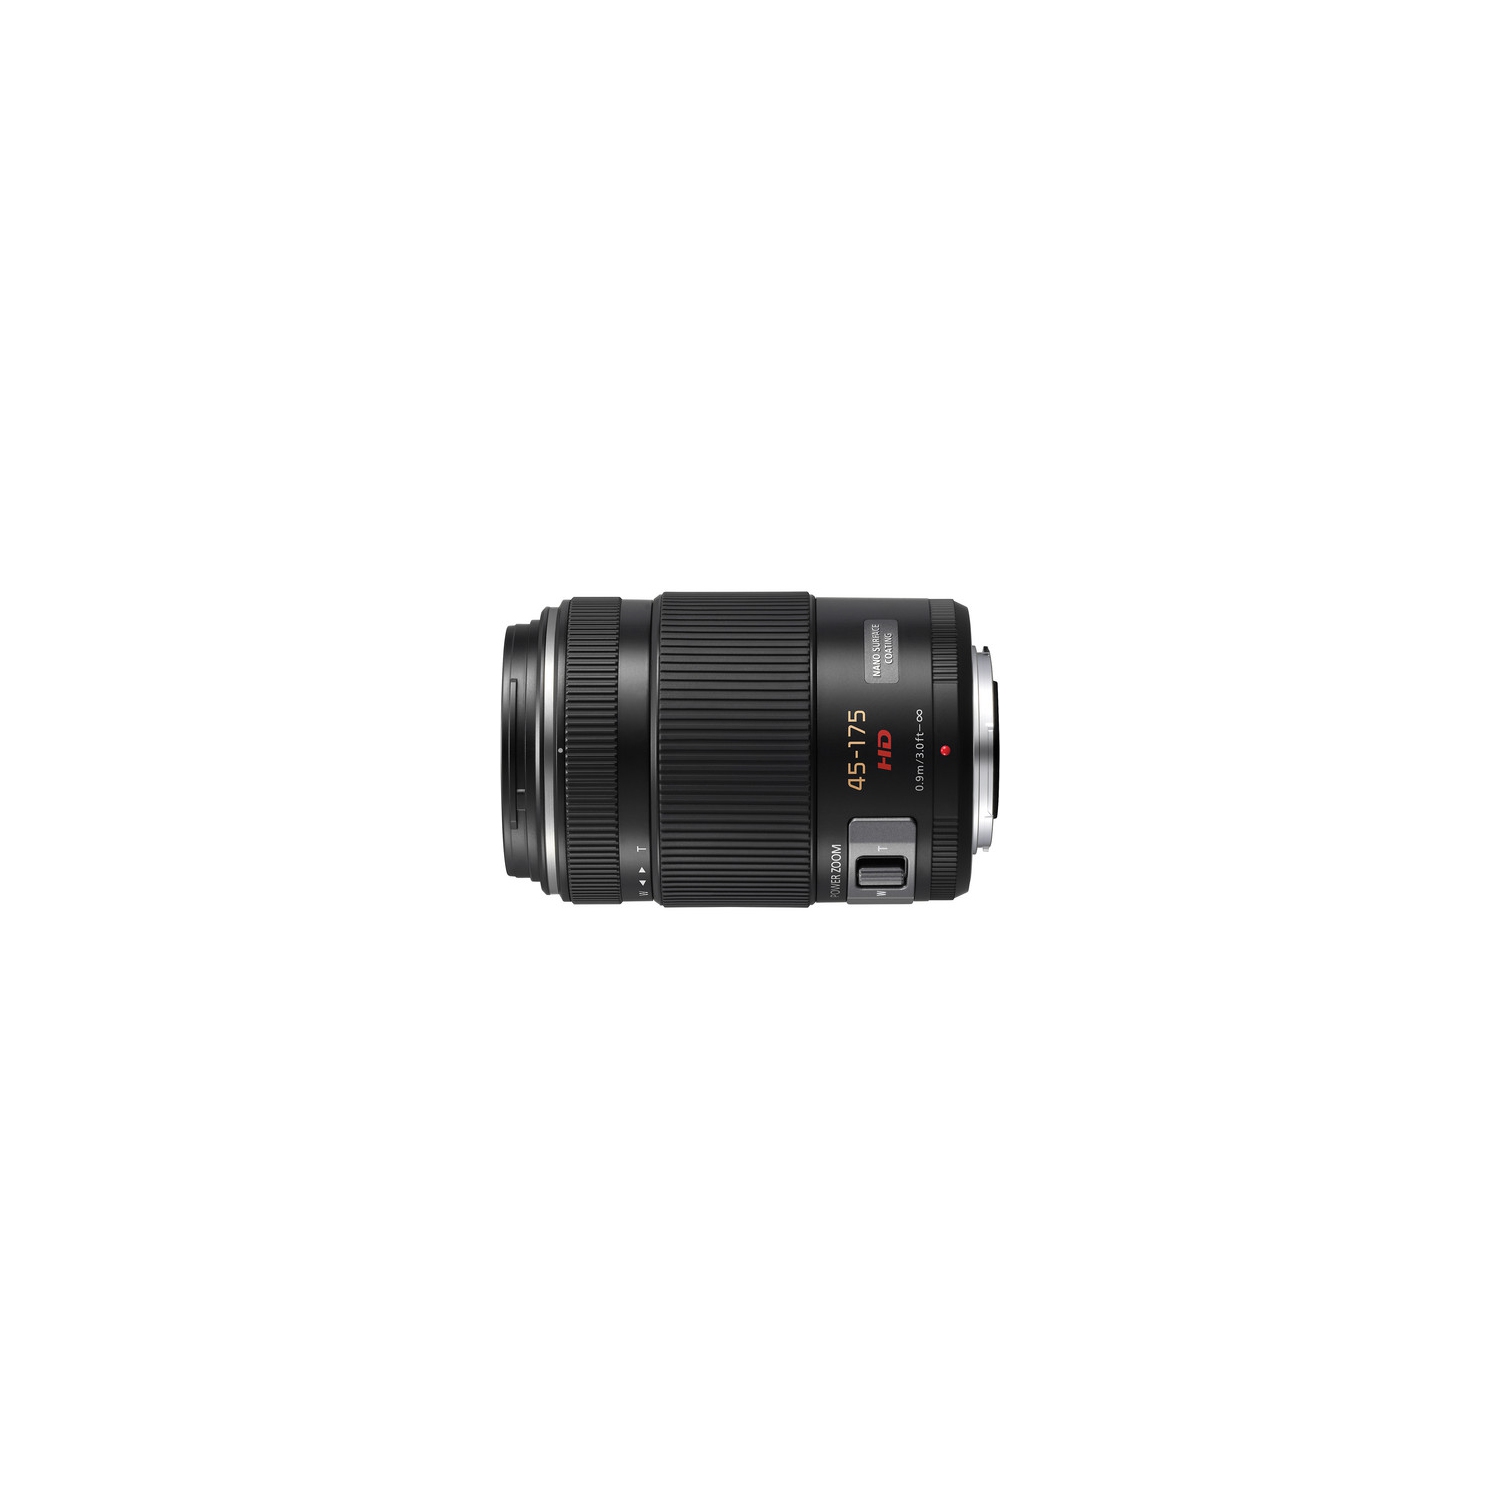 Panasonic Lumix G X Vario Pz 45 175mm F 4 0 5 6 Asph Lens Black Us Version W Seller Warranty Best Buy Canada